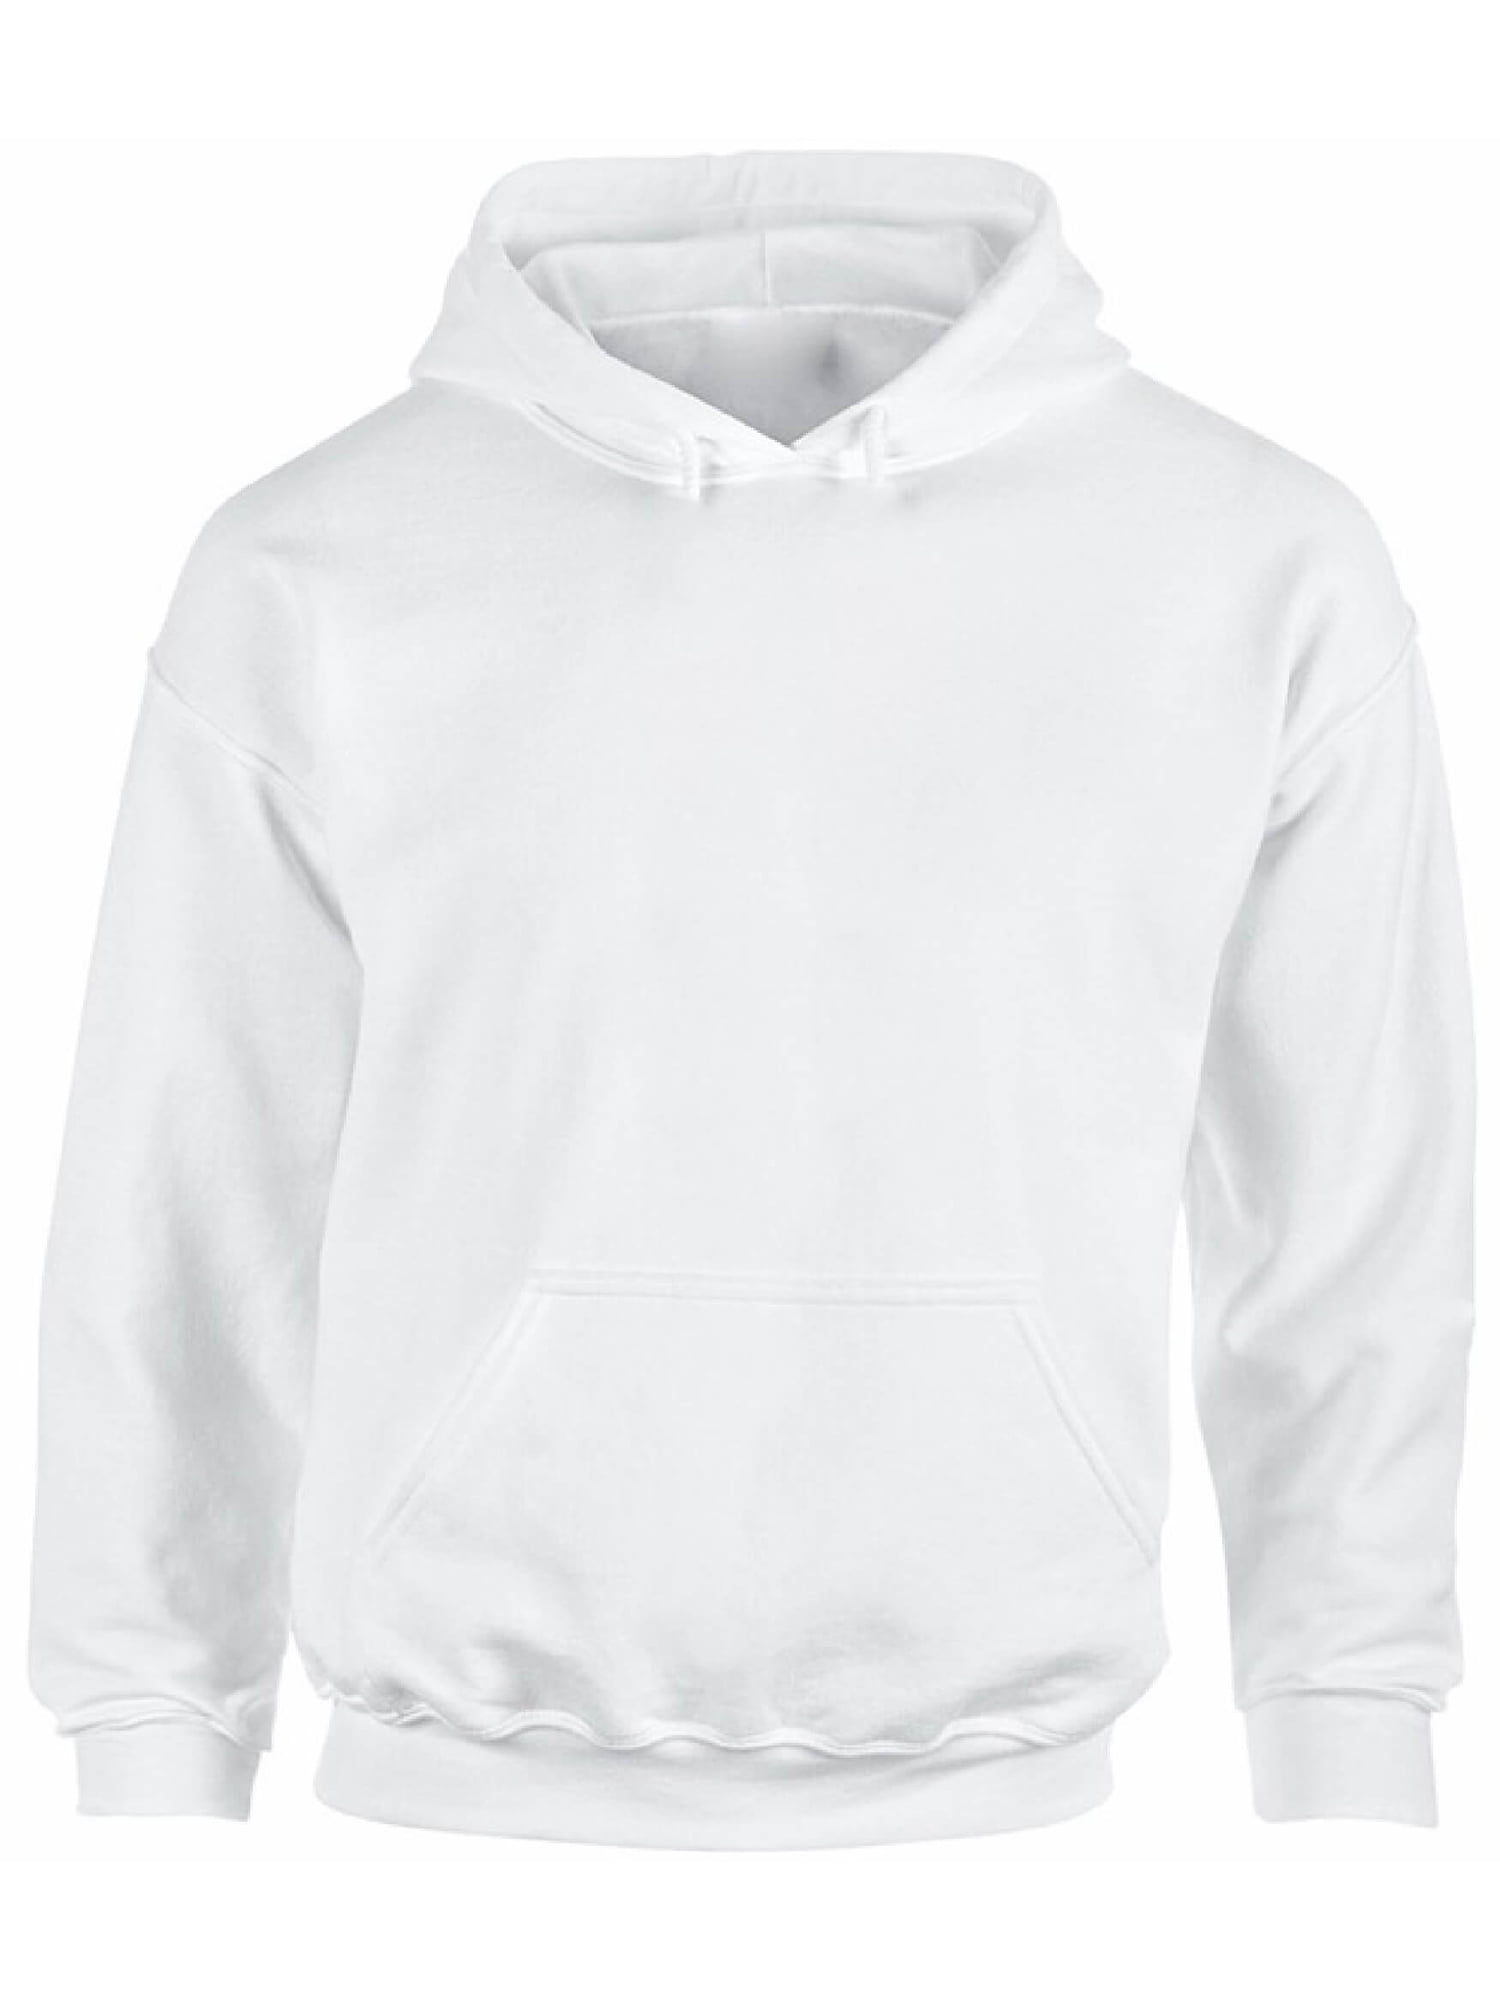 Mens Fashion Casual Hooded Sweatshirt Long Sleeve Three-color Stitching Sweatshirt 